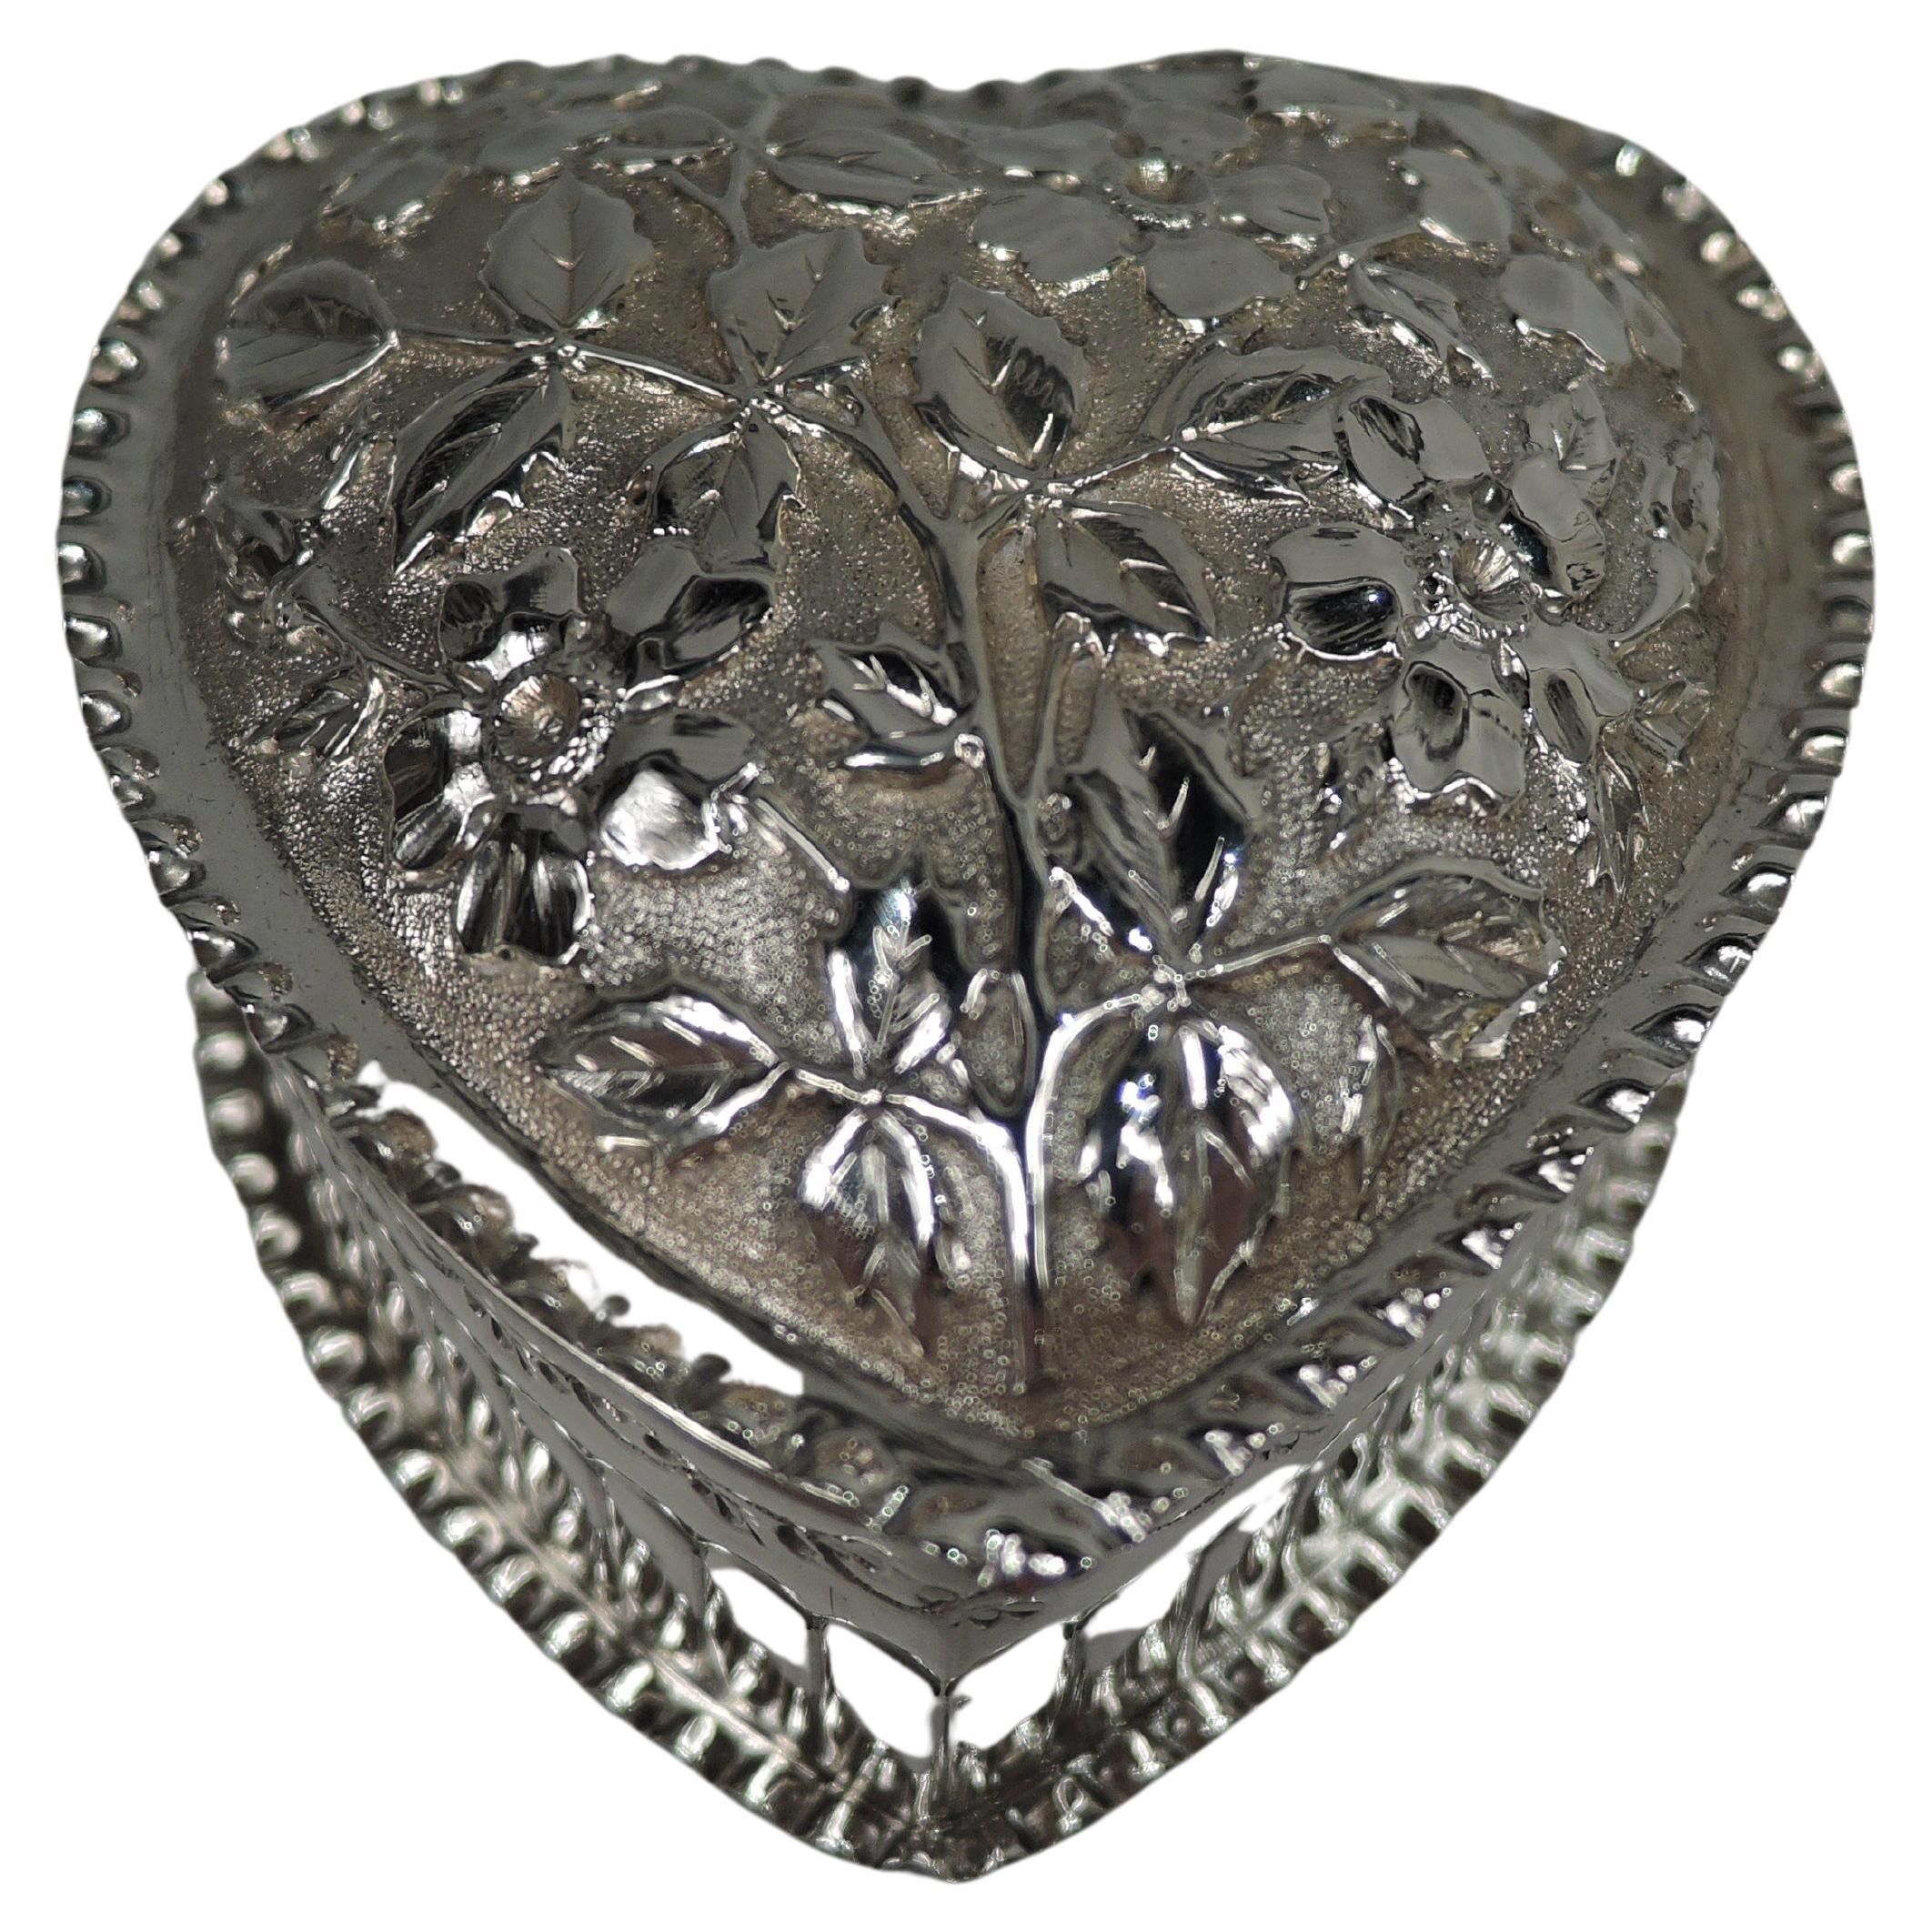 Vintage Silver Tone Metal Small Rectangular Jewelry Trinket 